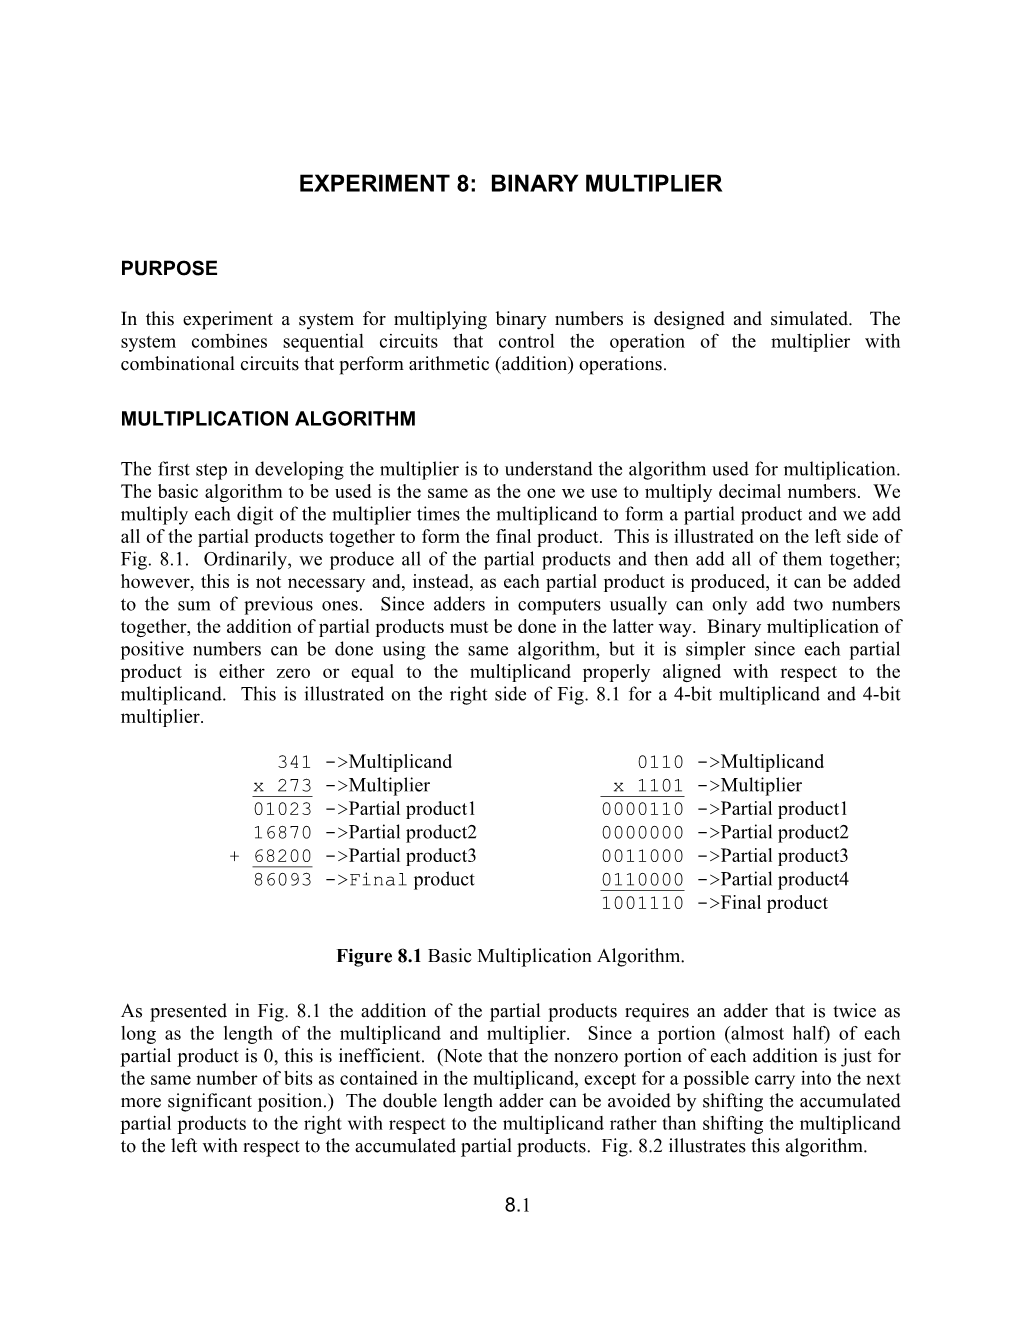 Experiment 8: Binary Multiplier